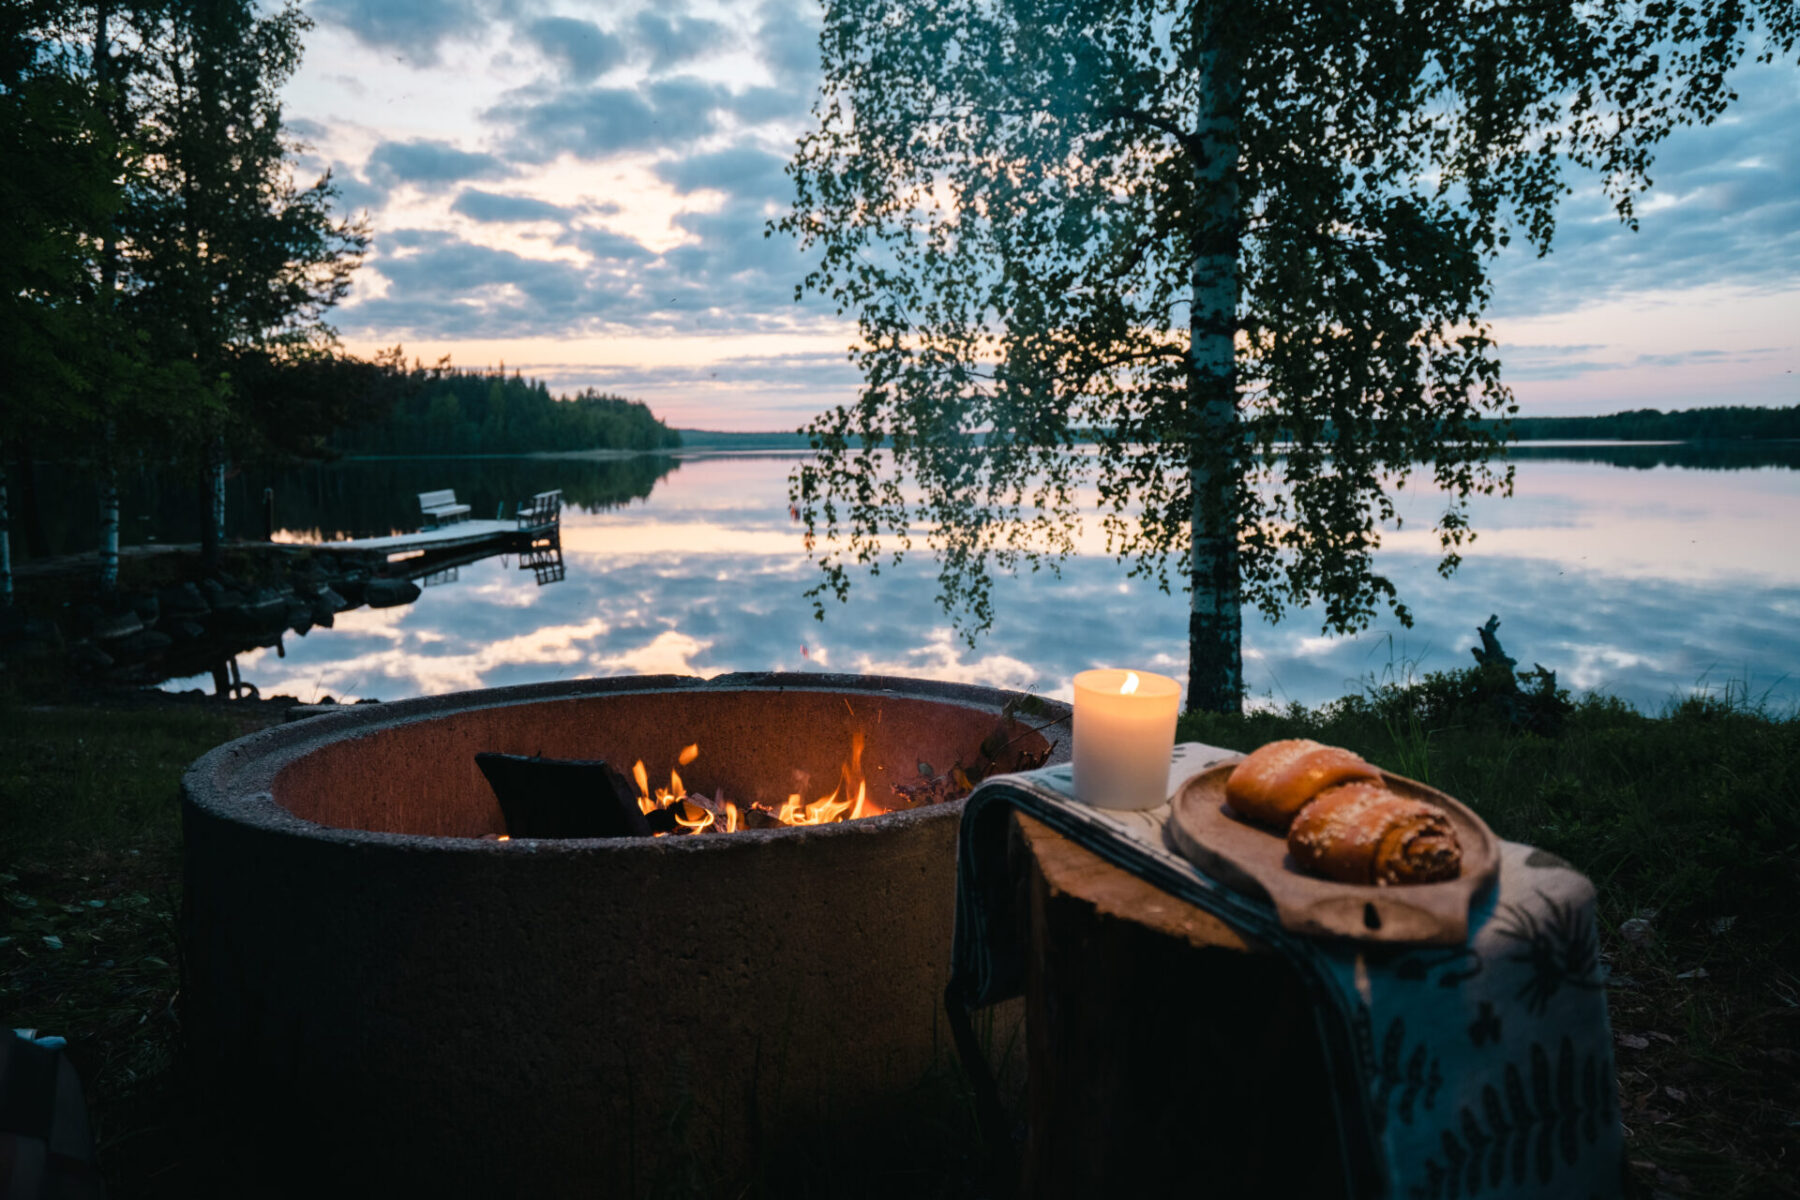 Sauna from Finland/ Juho Juuruspolvi